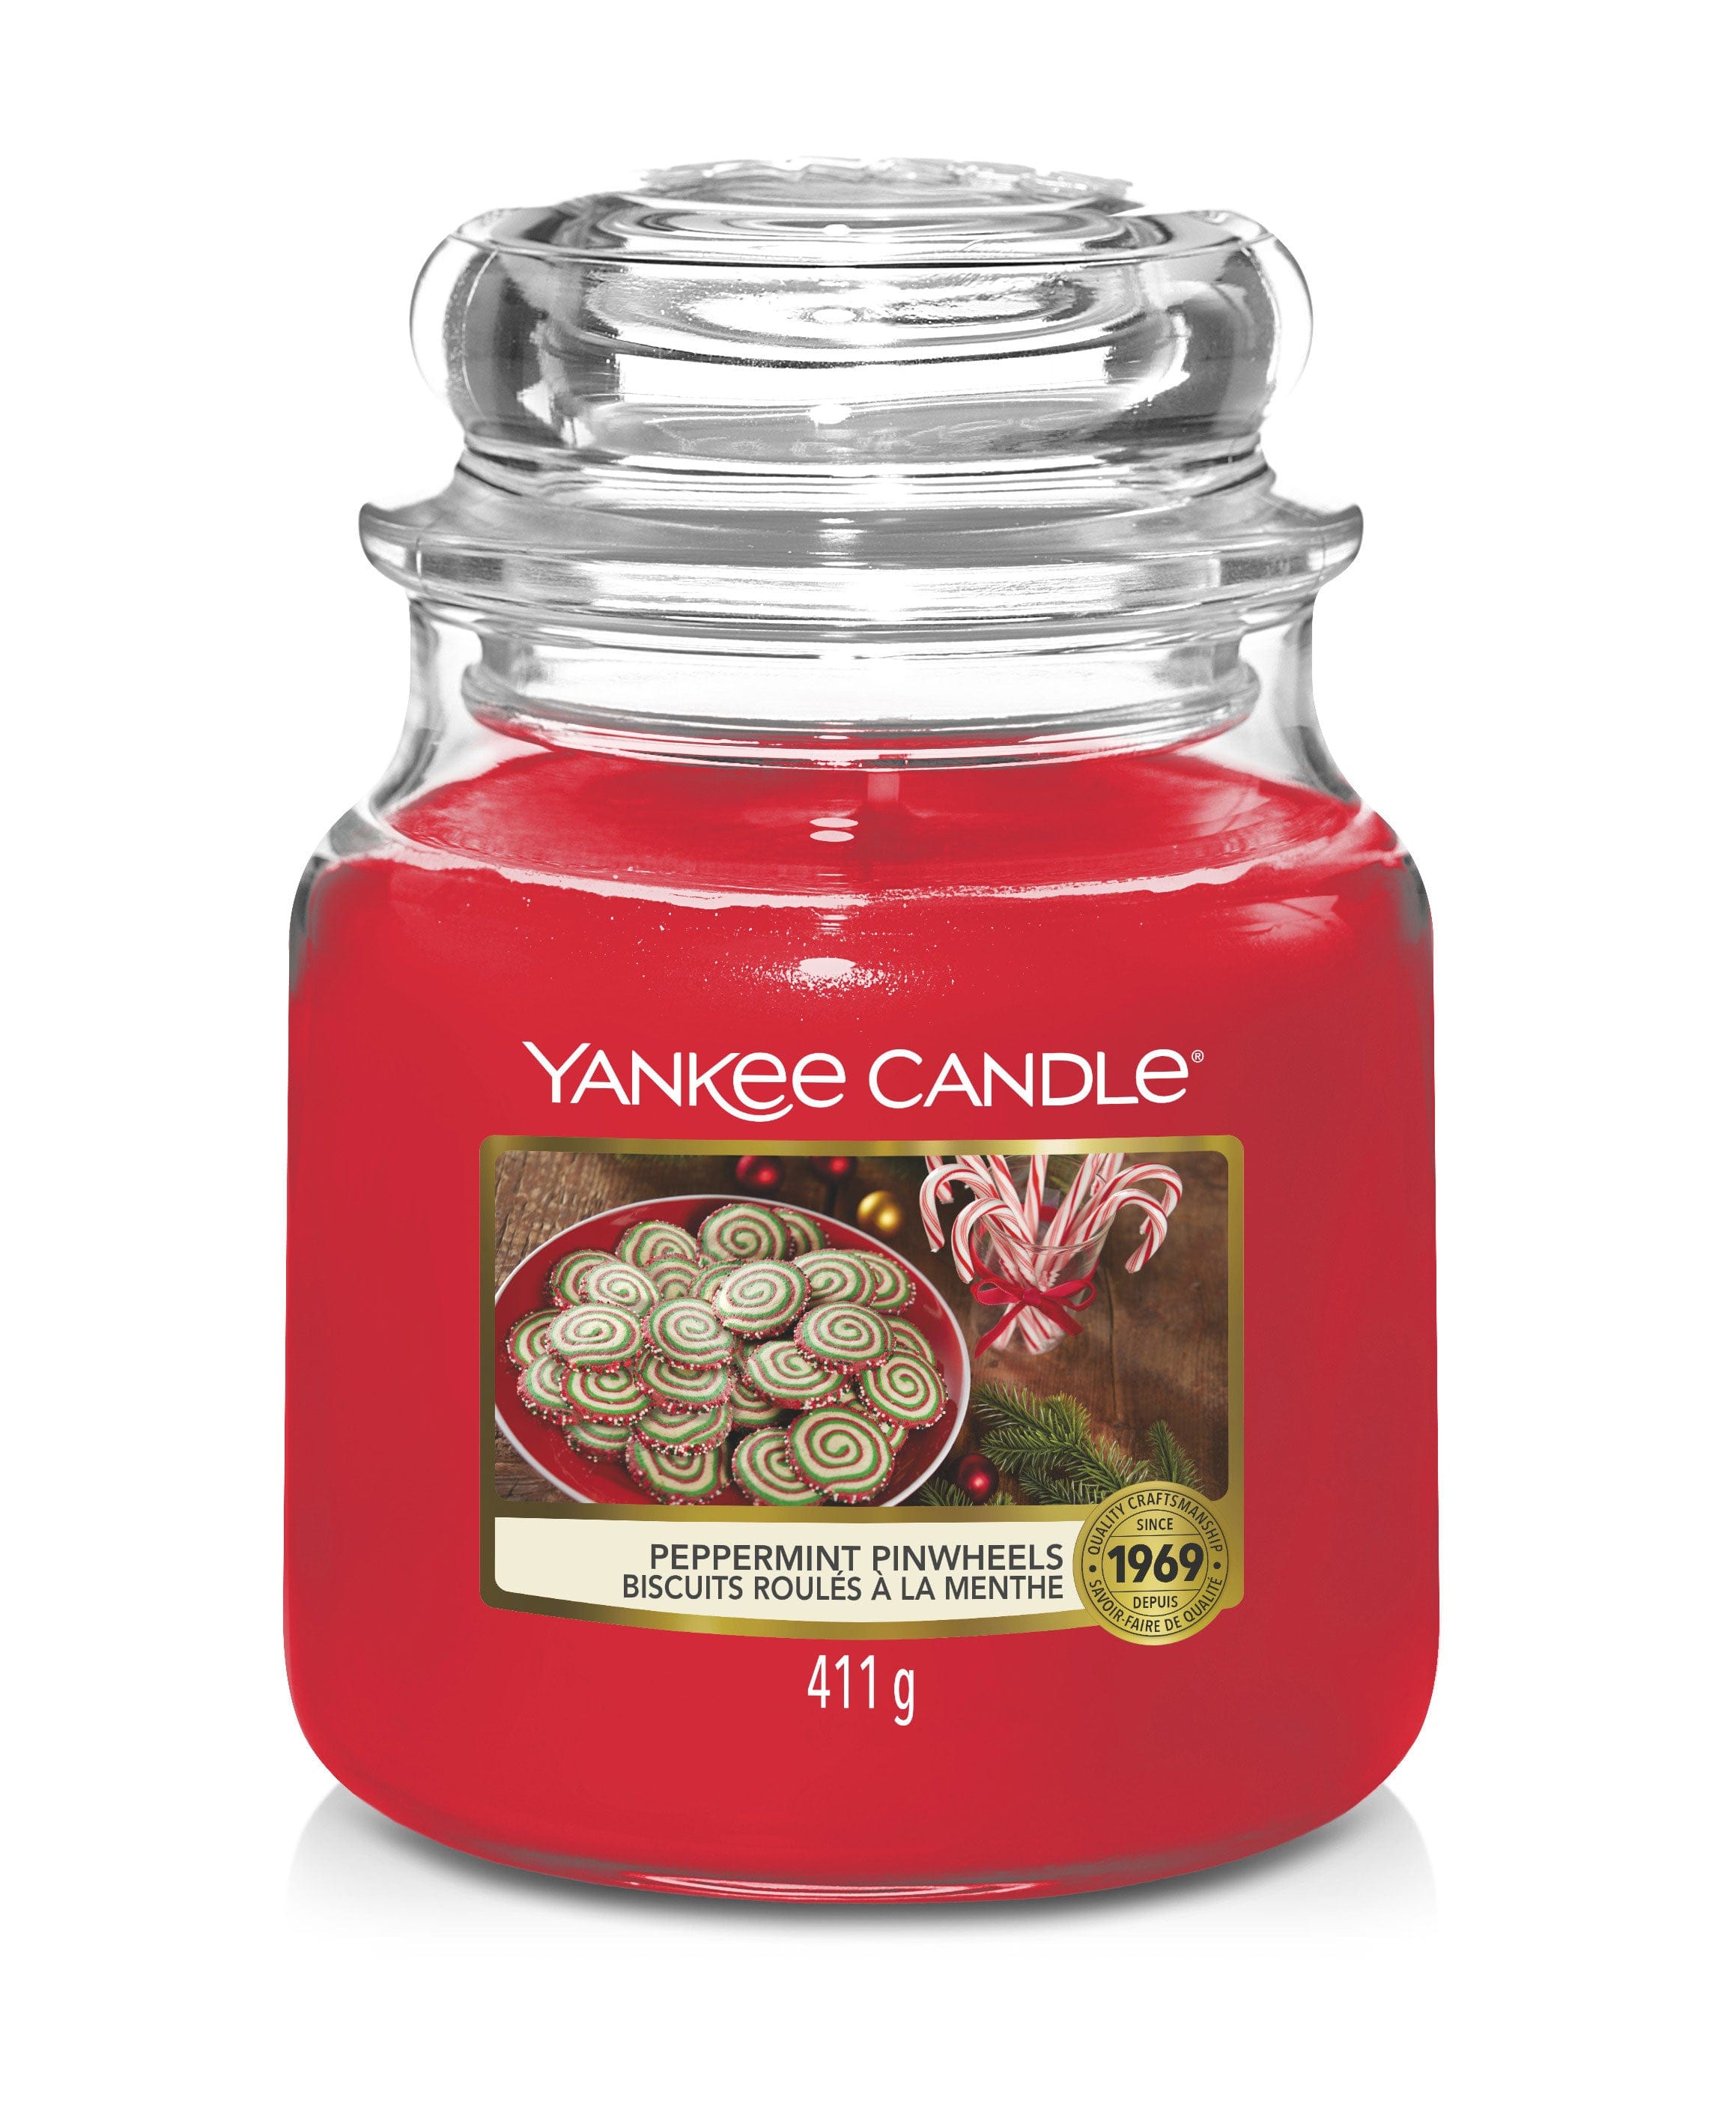 Yankee Candle Large Jar Candle Yankee Candle Medium Jar - Peppermint Pinwheels